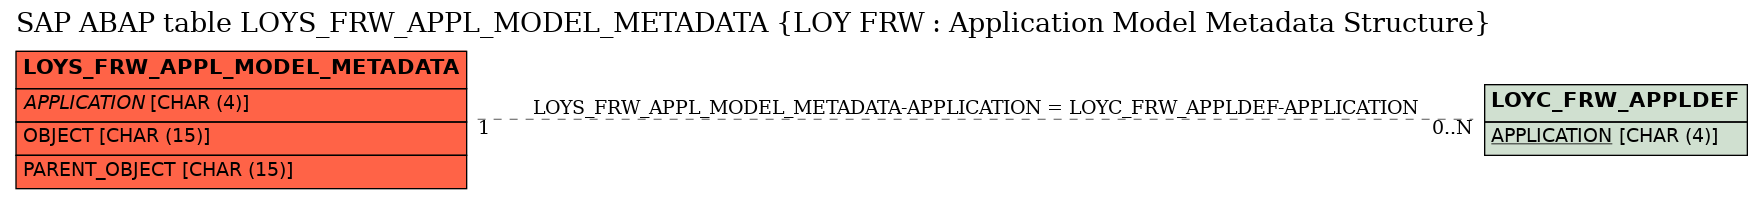 E-R Diagram for table LOYS_FRW_APPL_MODEL_METADATA (LOY FRW : Application Model Metadata Structure)